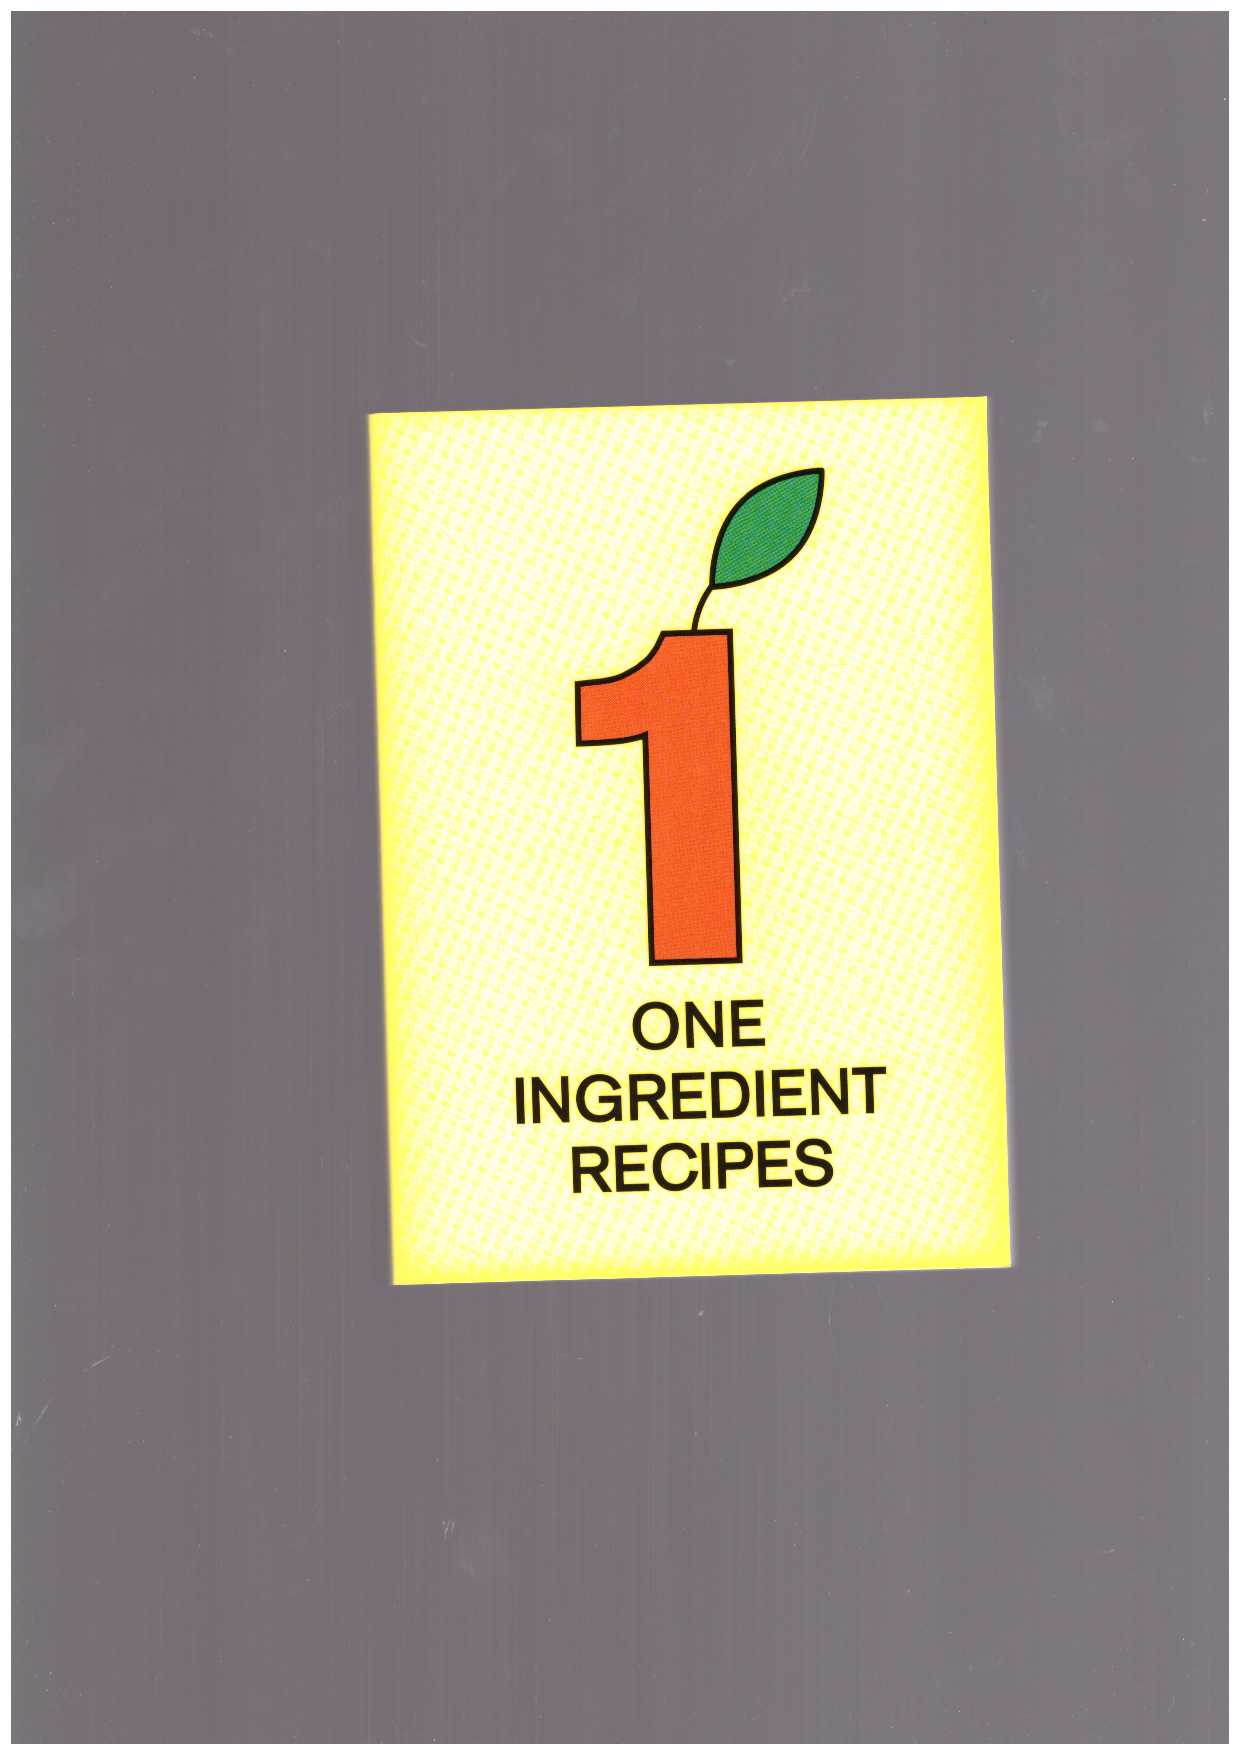 IN 'T VELD, Martijn - One ingredient recipes